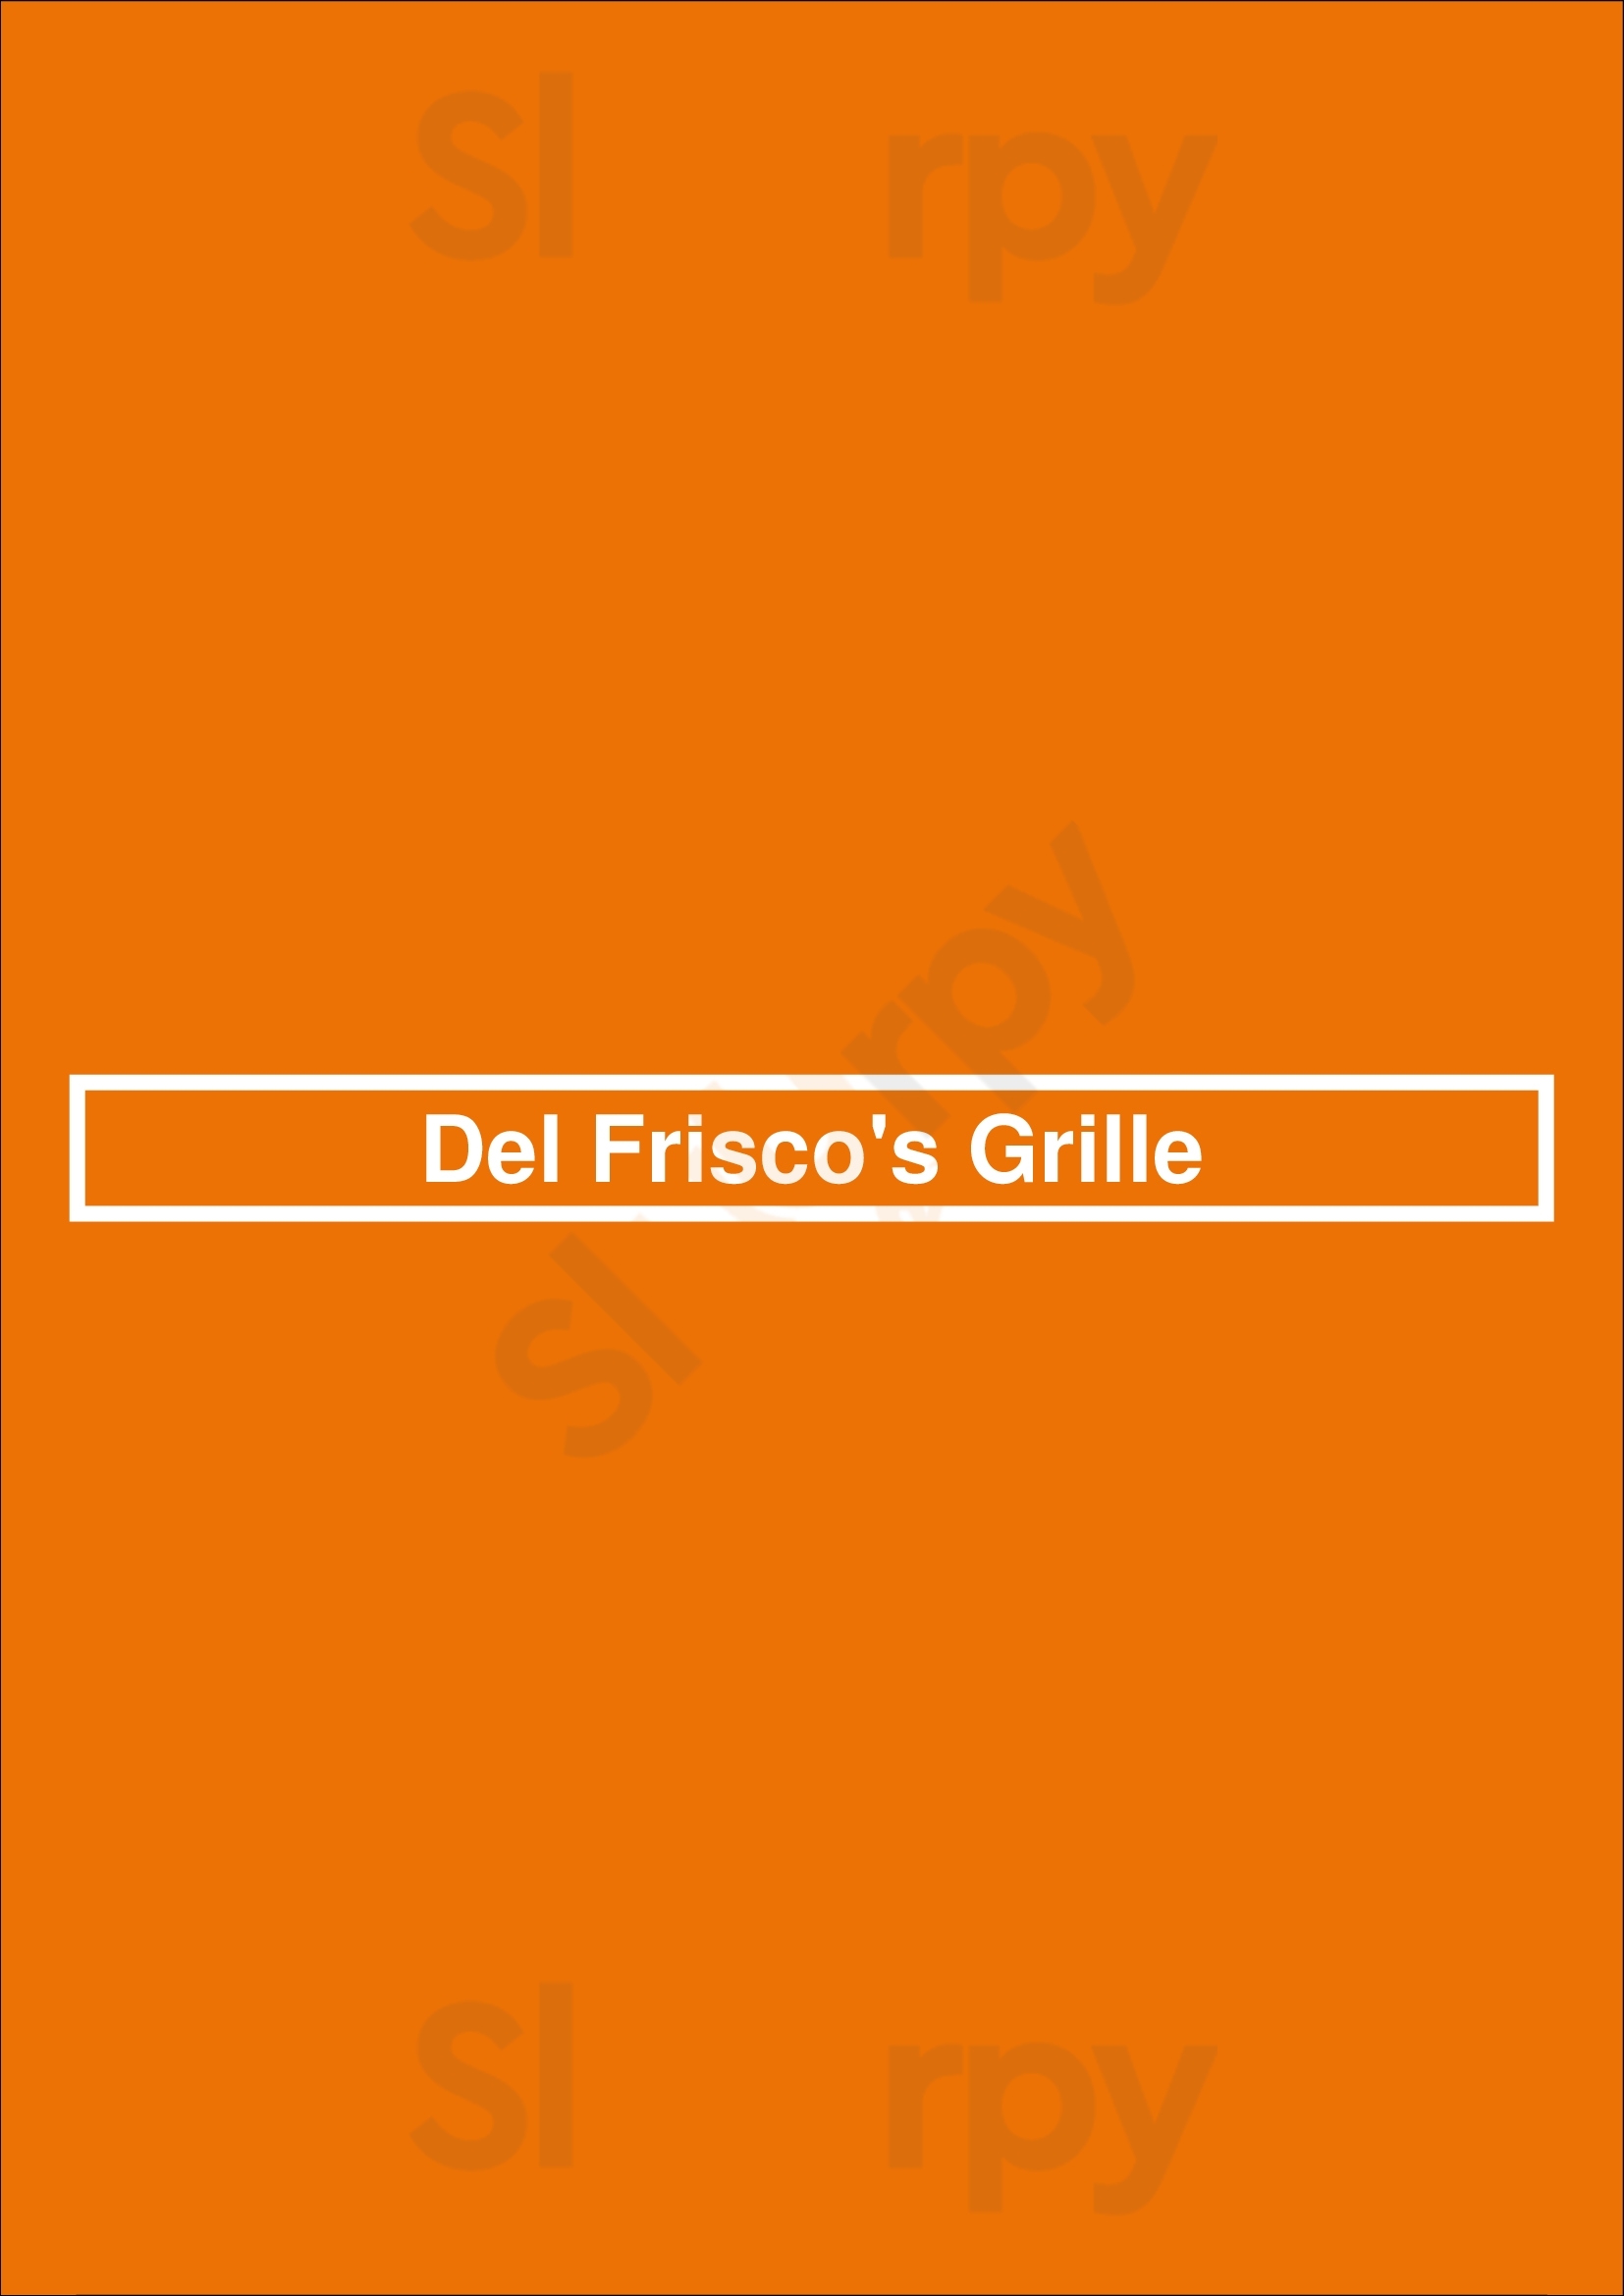 Del Frisco's Grille Tampa Menu - 1